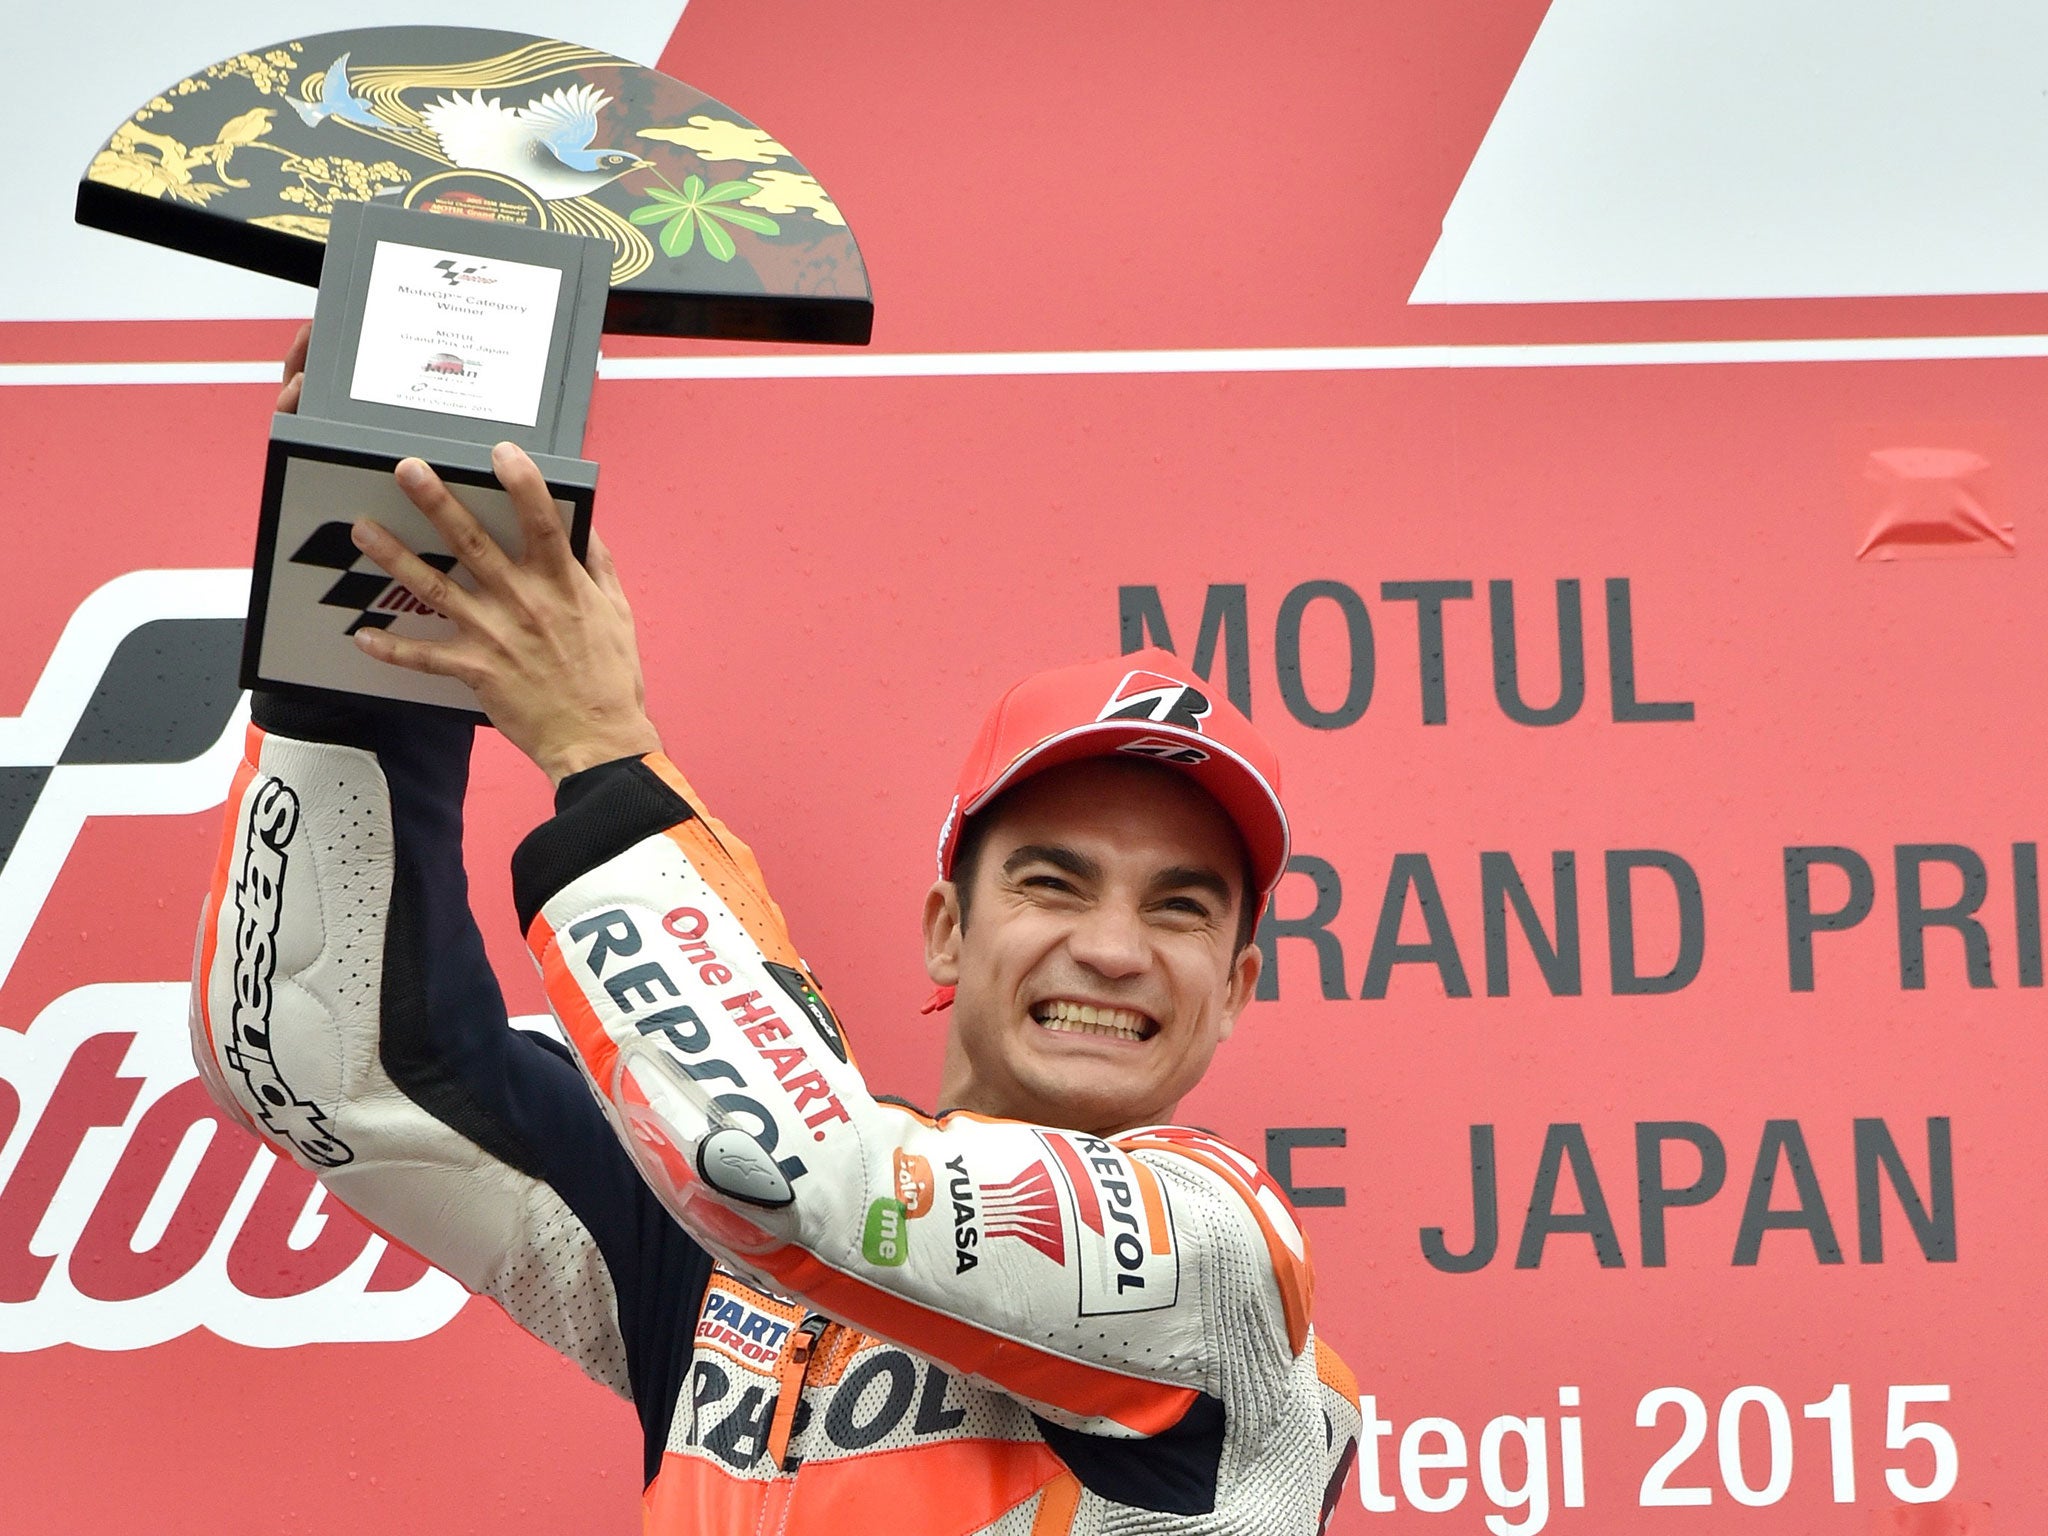 Dani Pedrosa lifts the trophy after winning the MotoGP Japanese Grand Prix